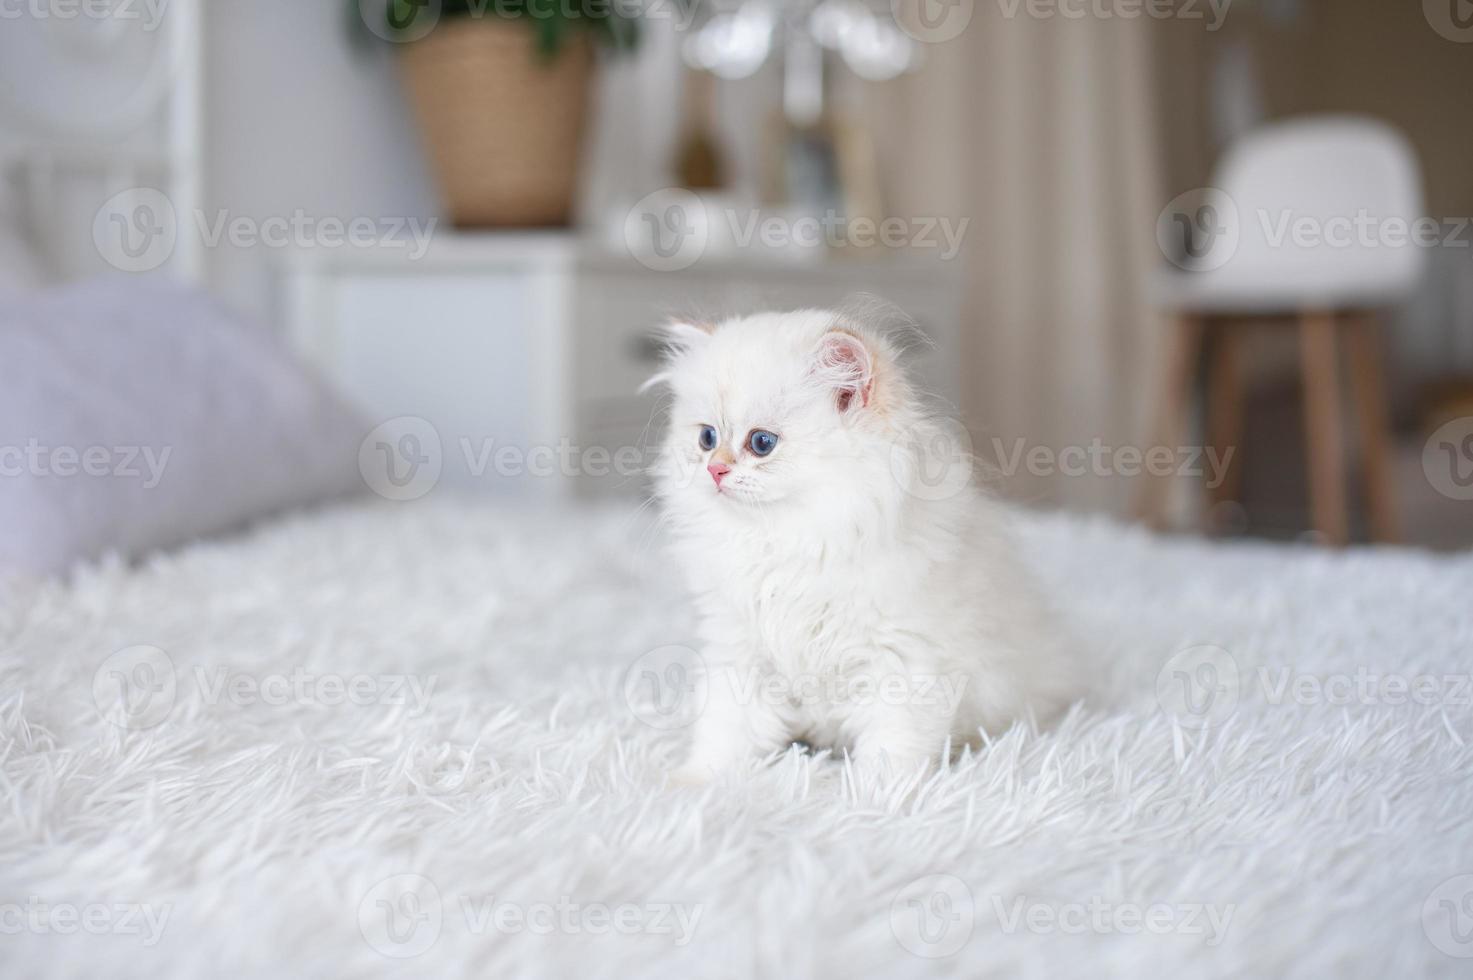 wit lang haar Brits katje foto